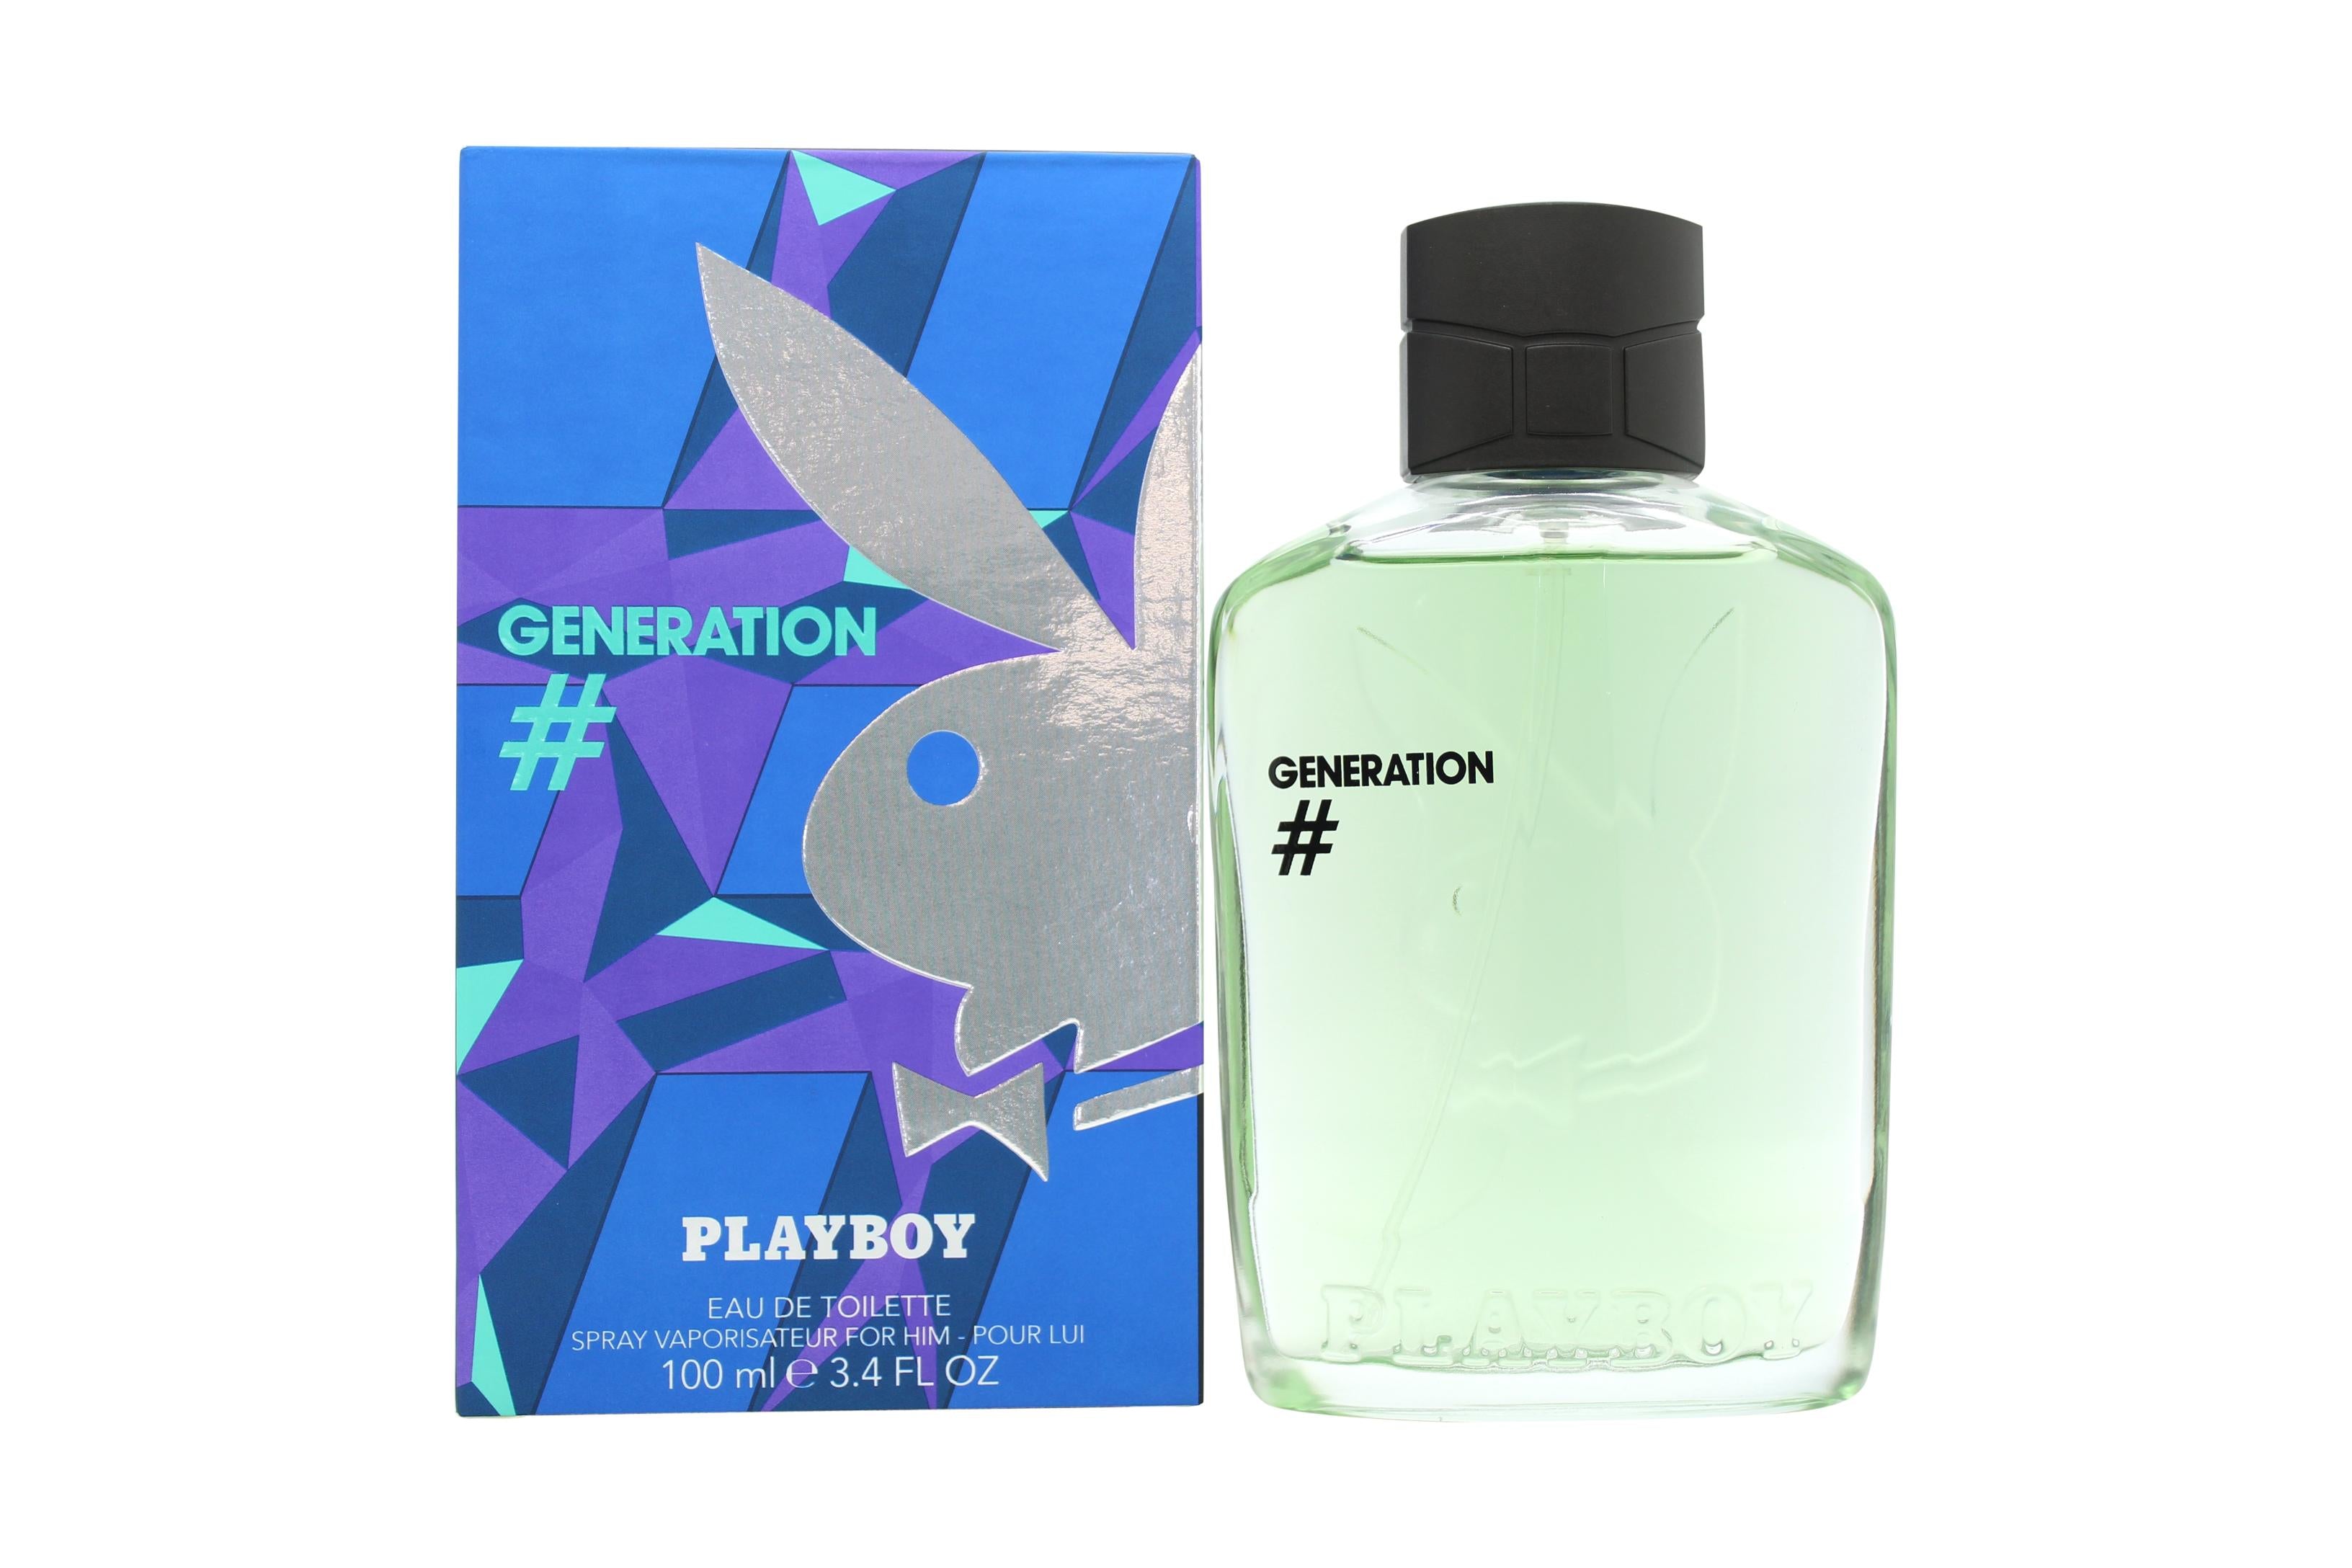 View Playboy Generation For Him Eau de Toilette 100ml Spray information